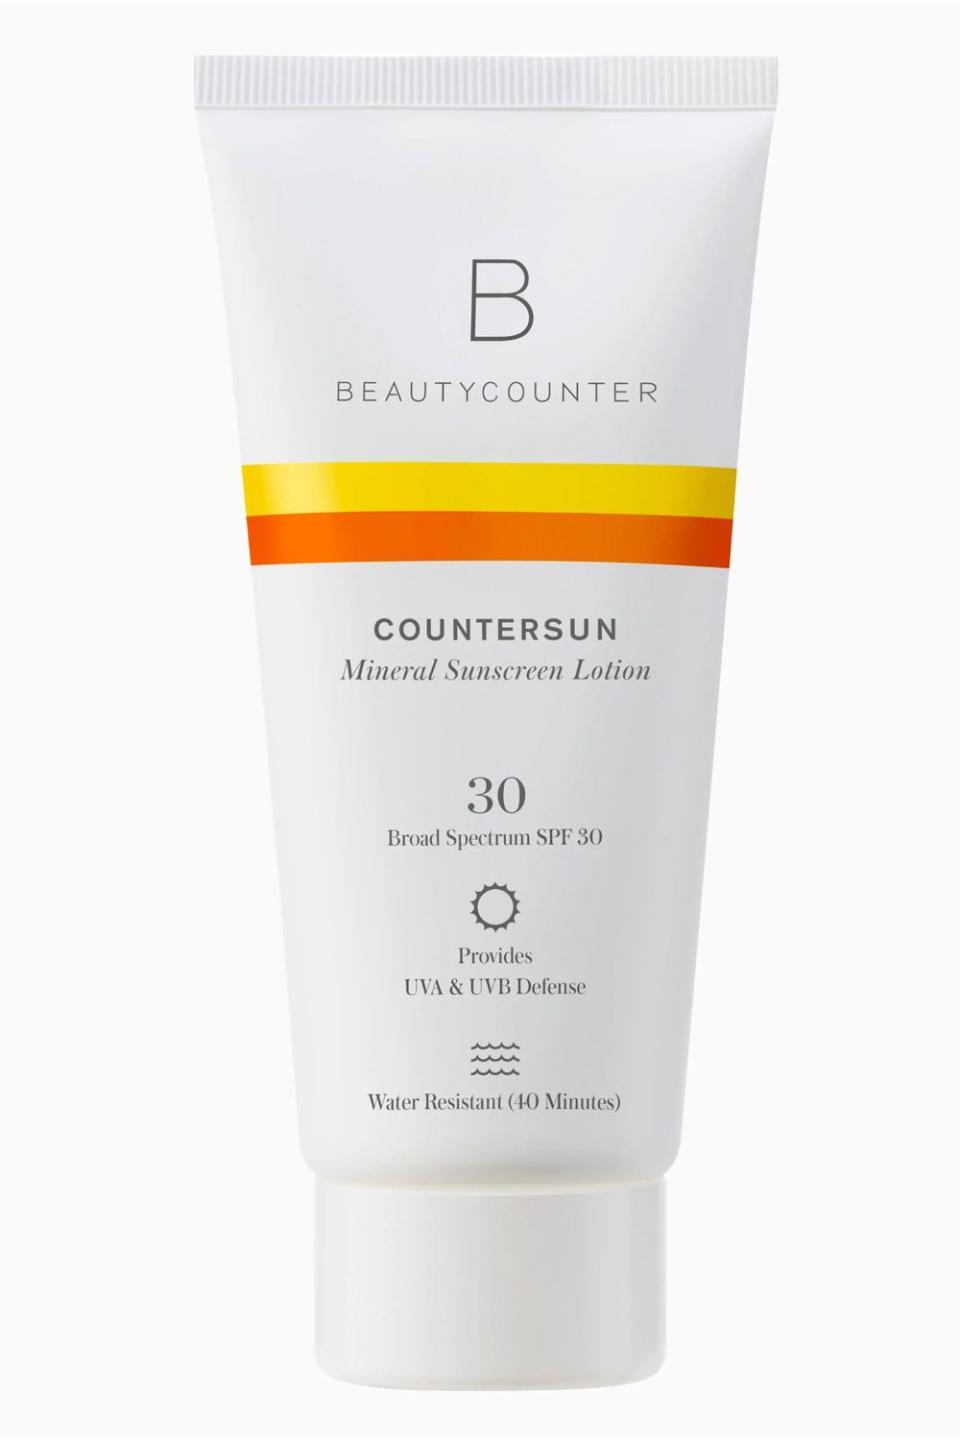 4) Beautycounter Countersun Mineral Sunscreen Lotion SPF 30